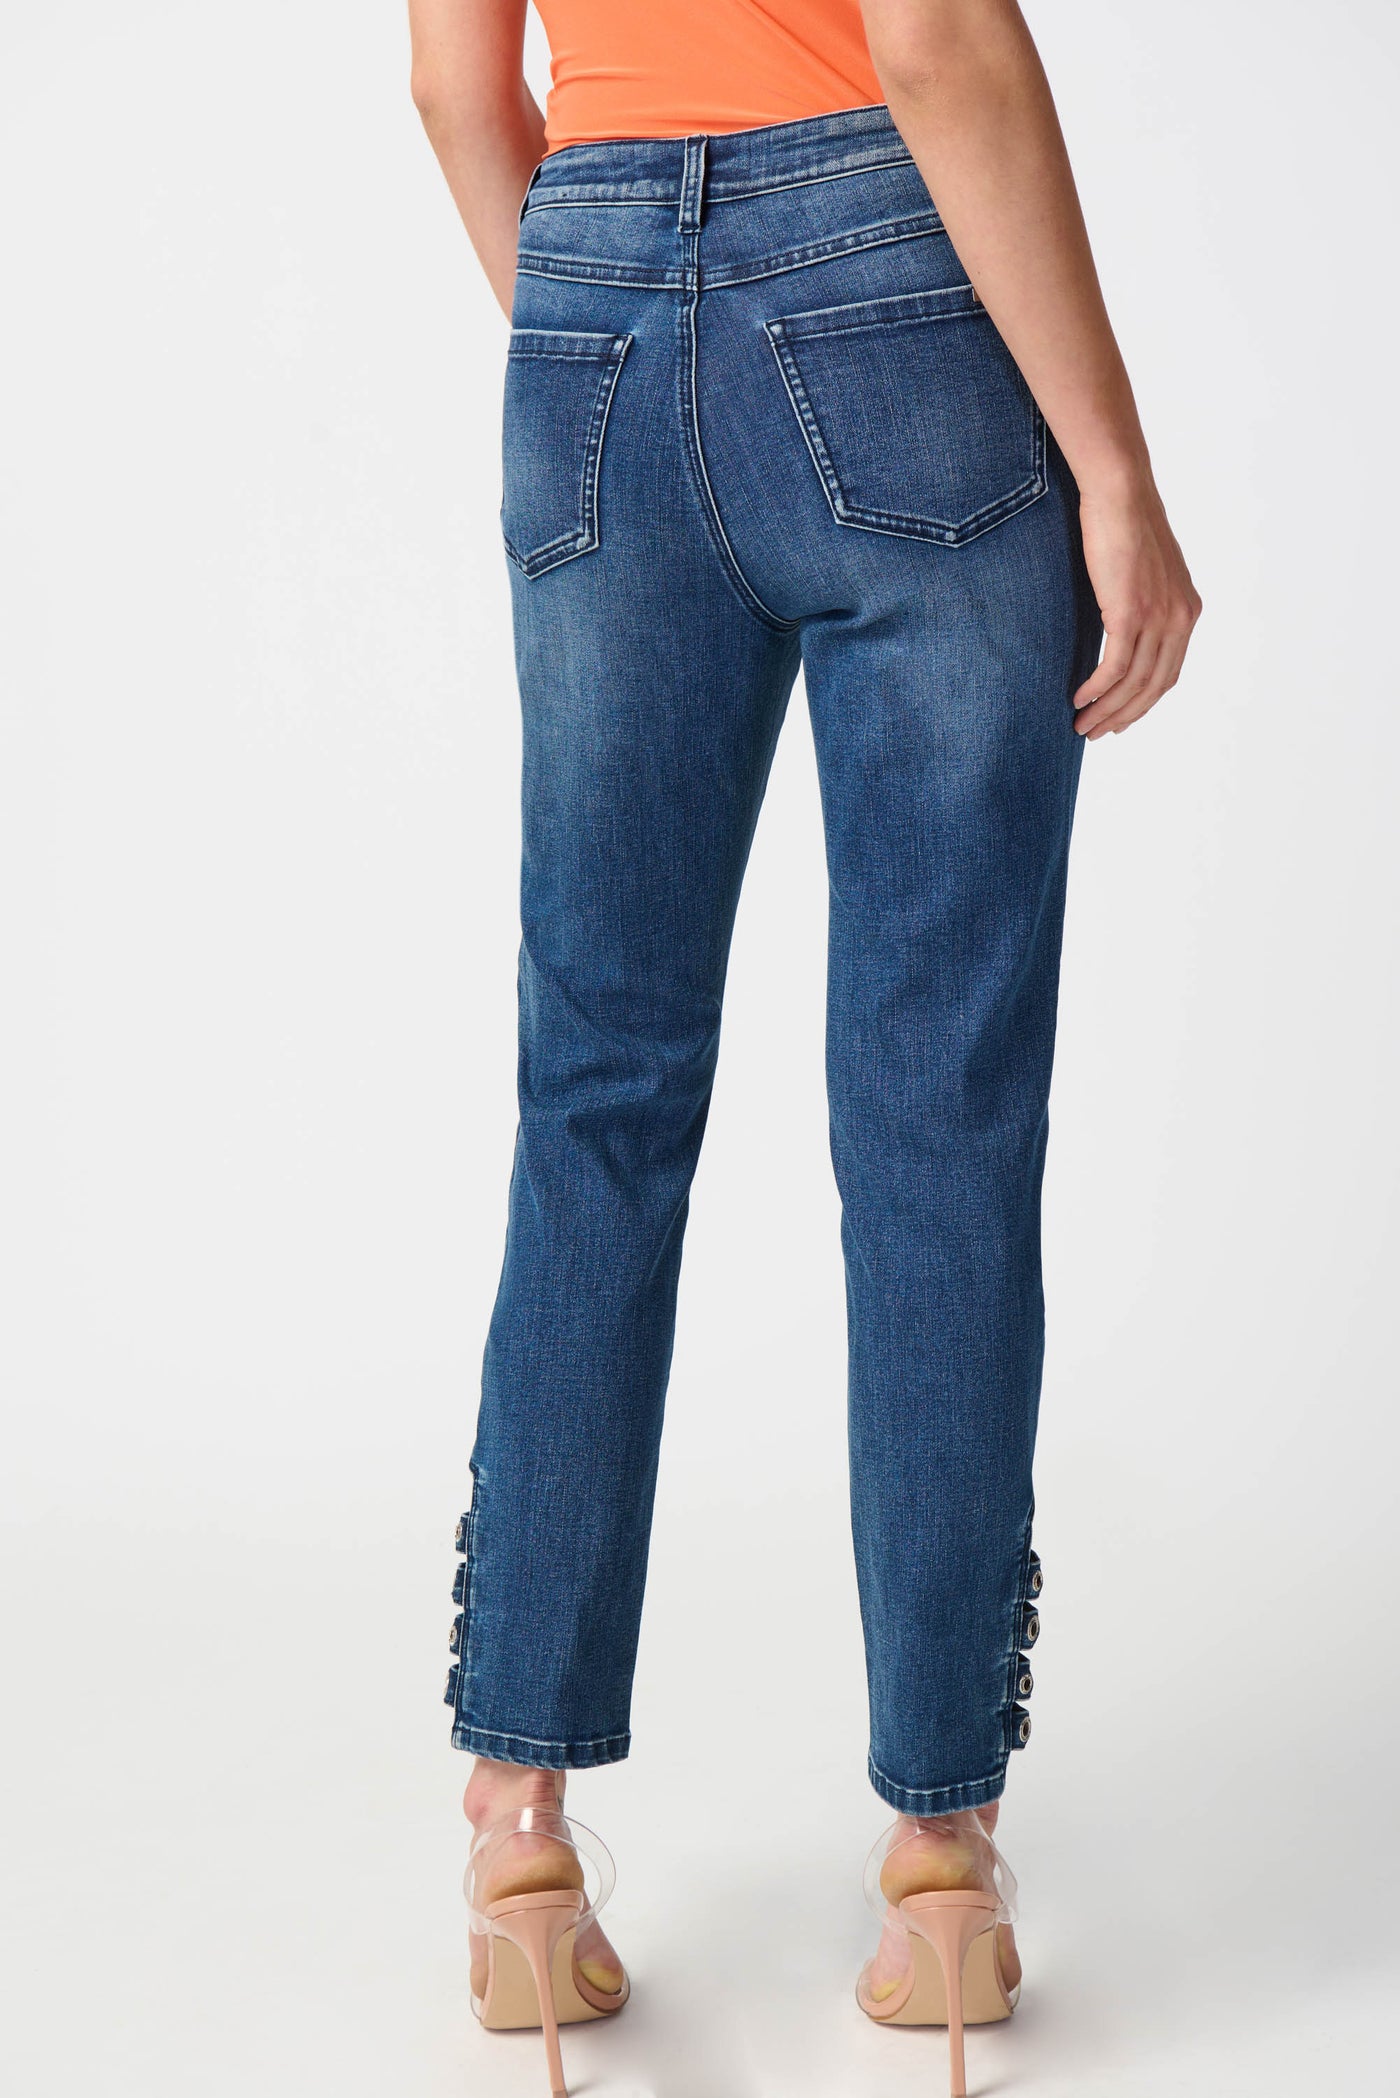 Joseph Ribkoff Classic Slim Jeans with Embellished Hem 